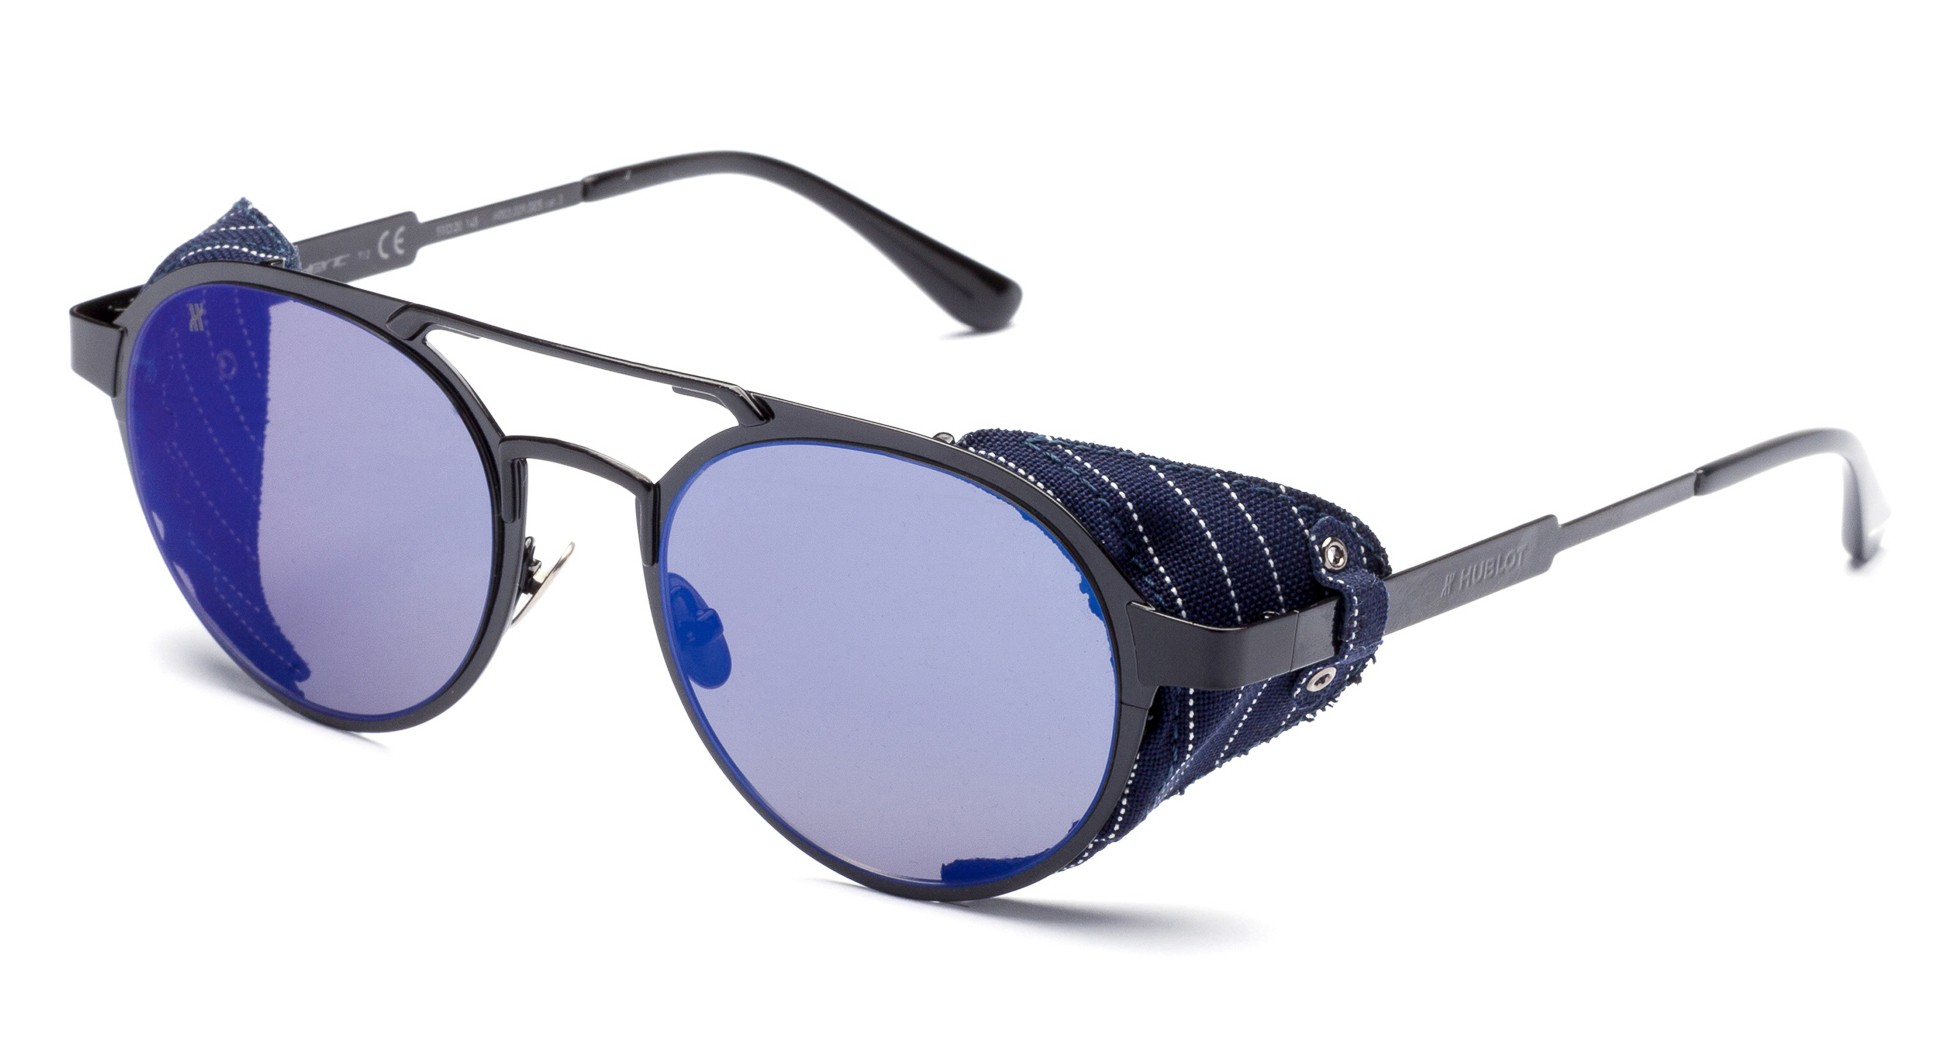 Hublot Sunglasses - Buy Authentic Hublot Sunglasses at Best Price in India  | Dayal Opticals